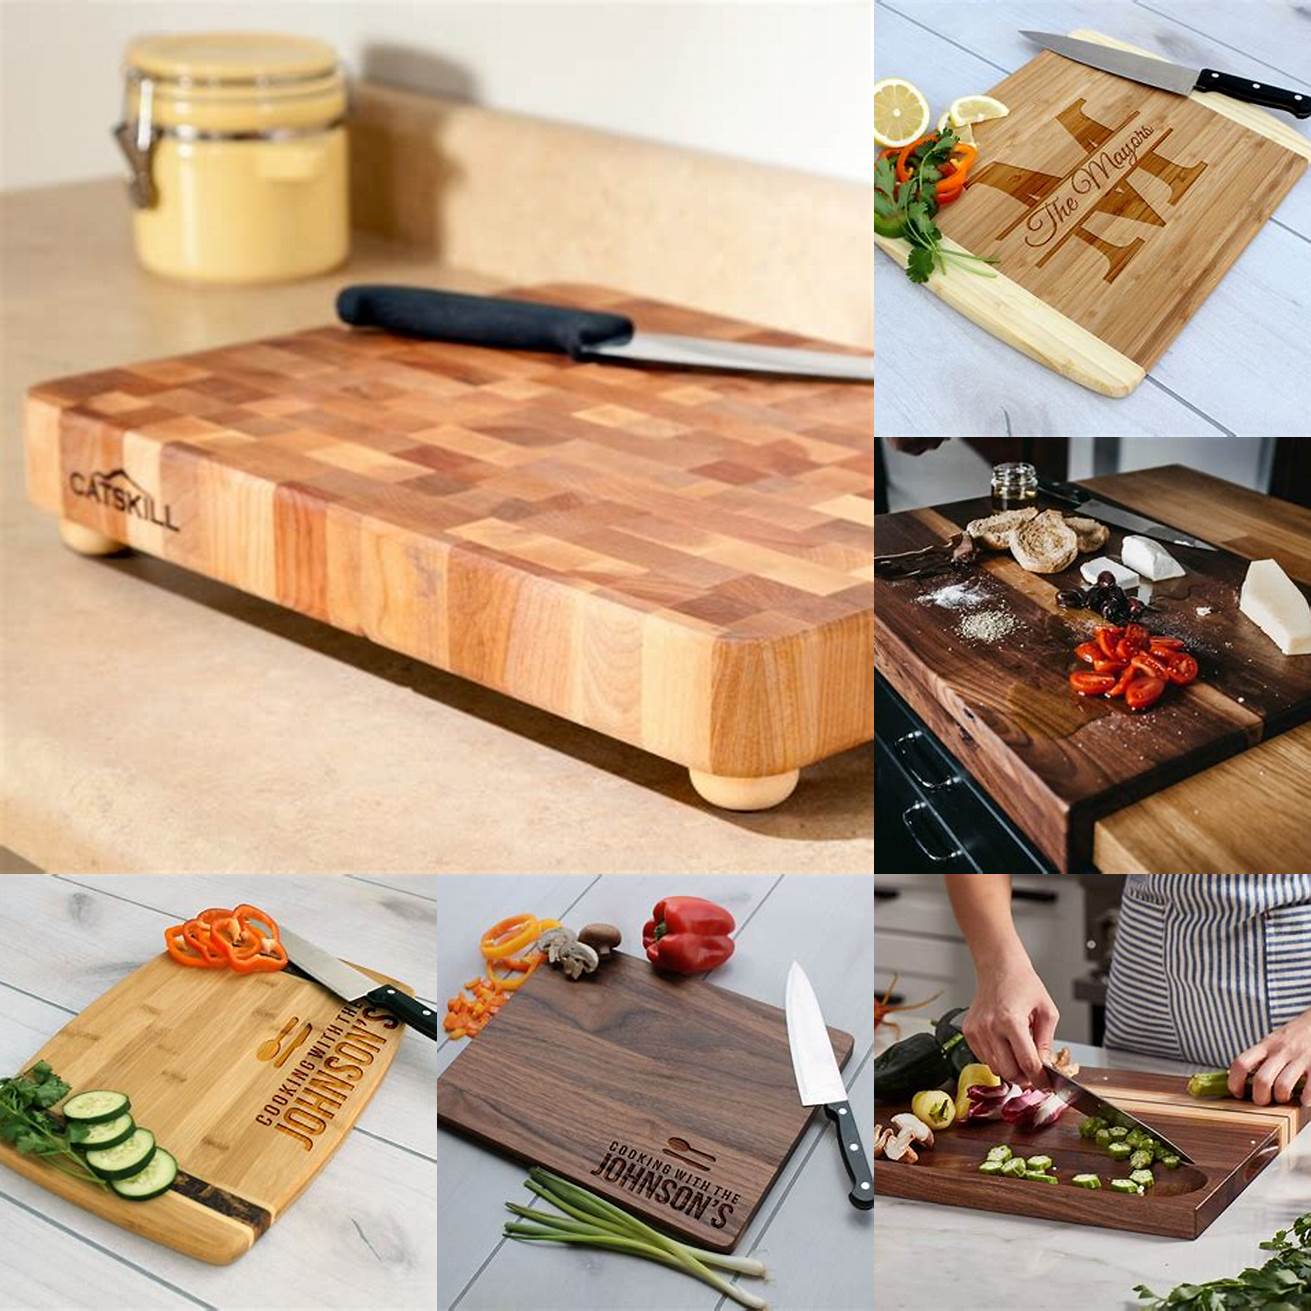 Invest in a good cutting board